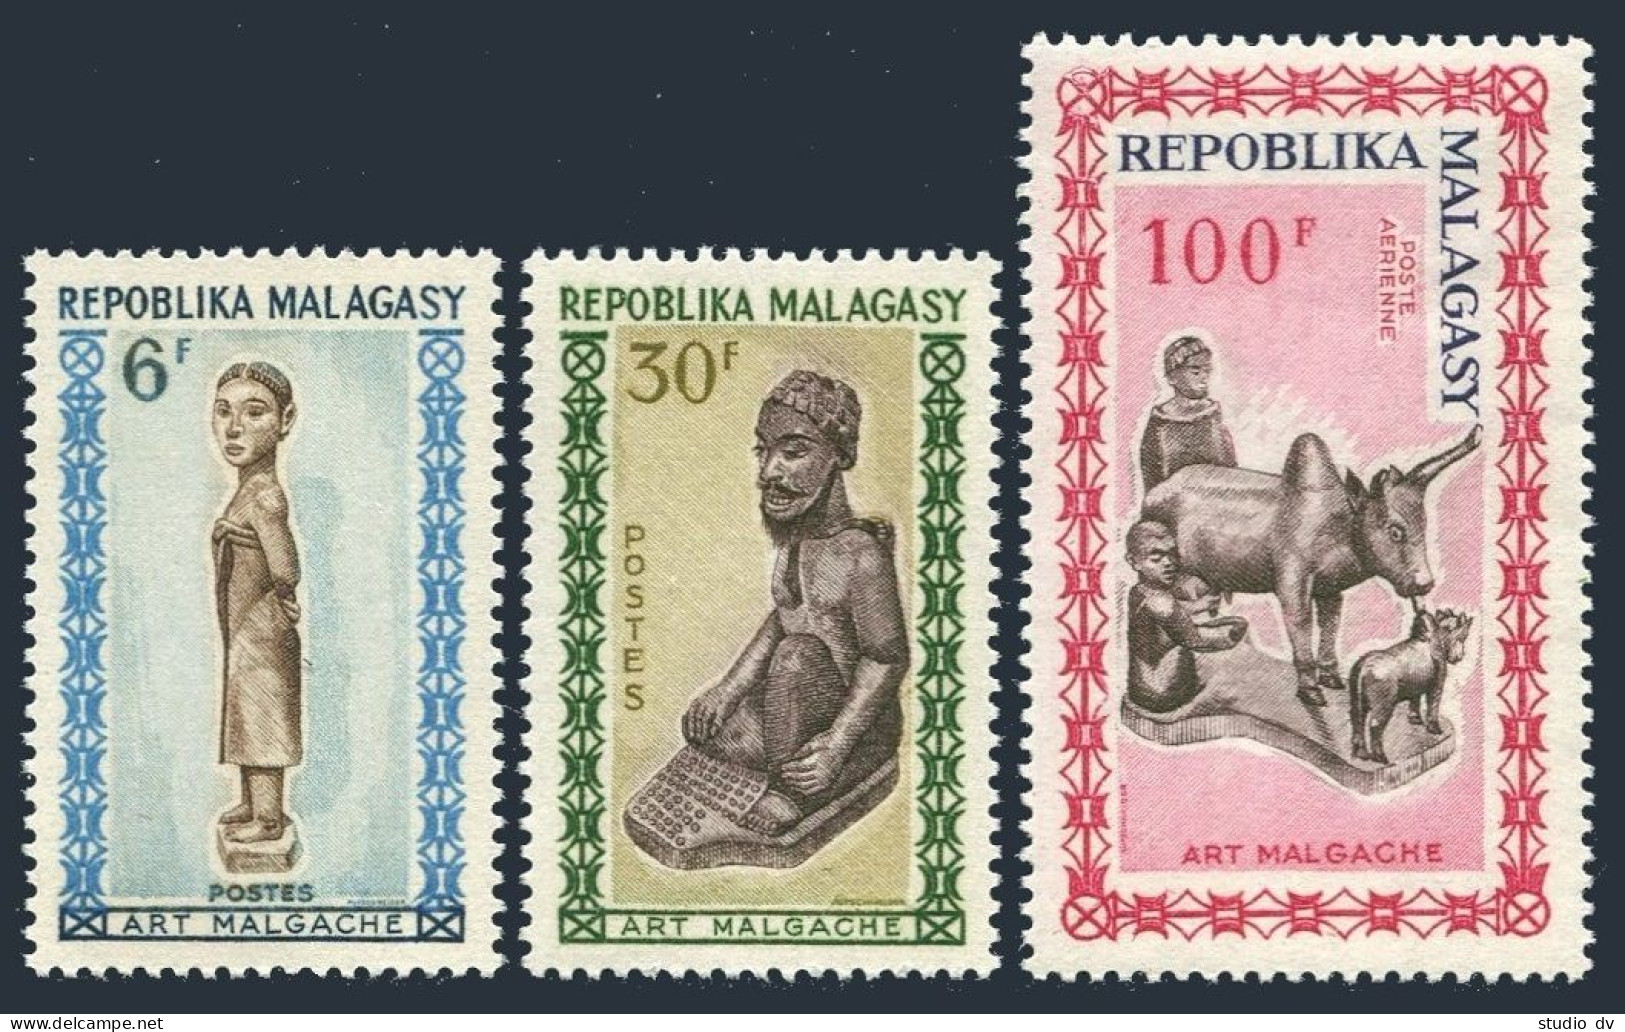 Malagasy 358-359, C79, MNH. Michel 523-525. Carved Statues, Zebu Sculpture, 1964 - Madagaskar (1960-...)